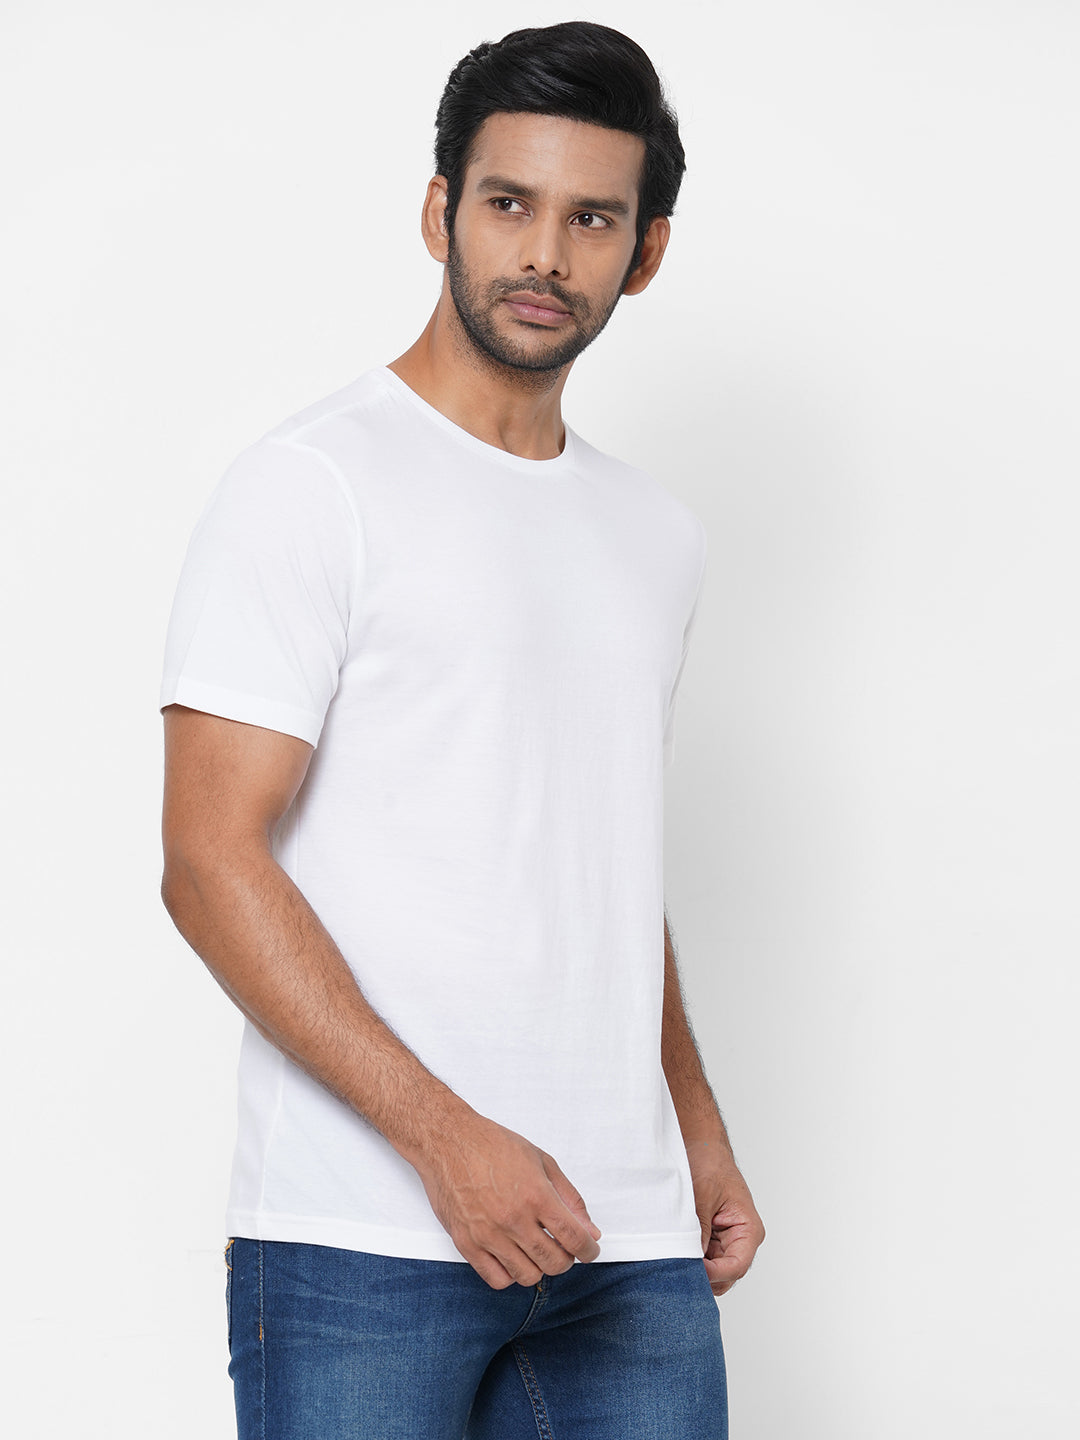 Men's White Cotton Regular Fit Tshirts